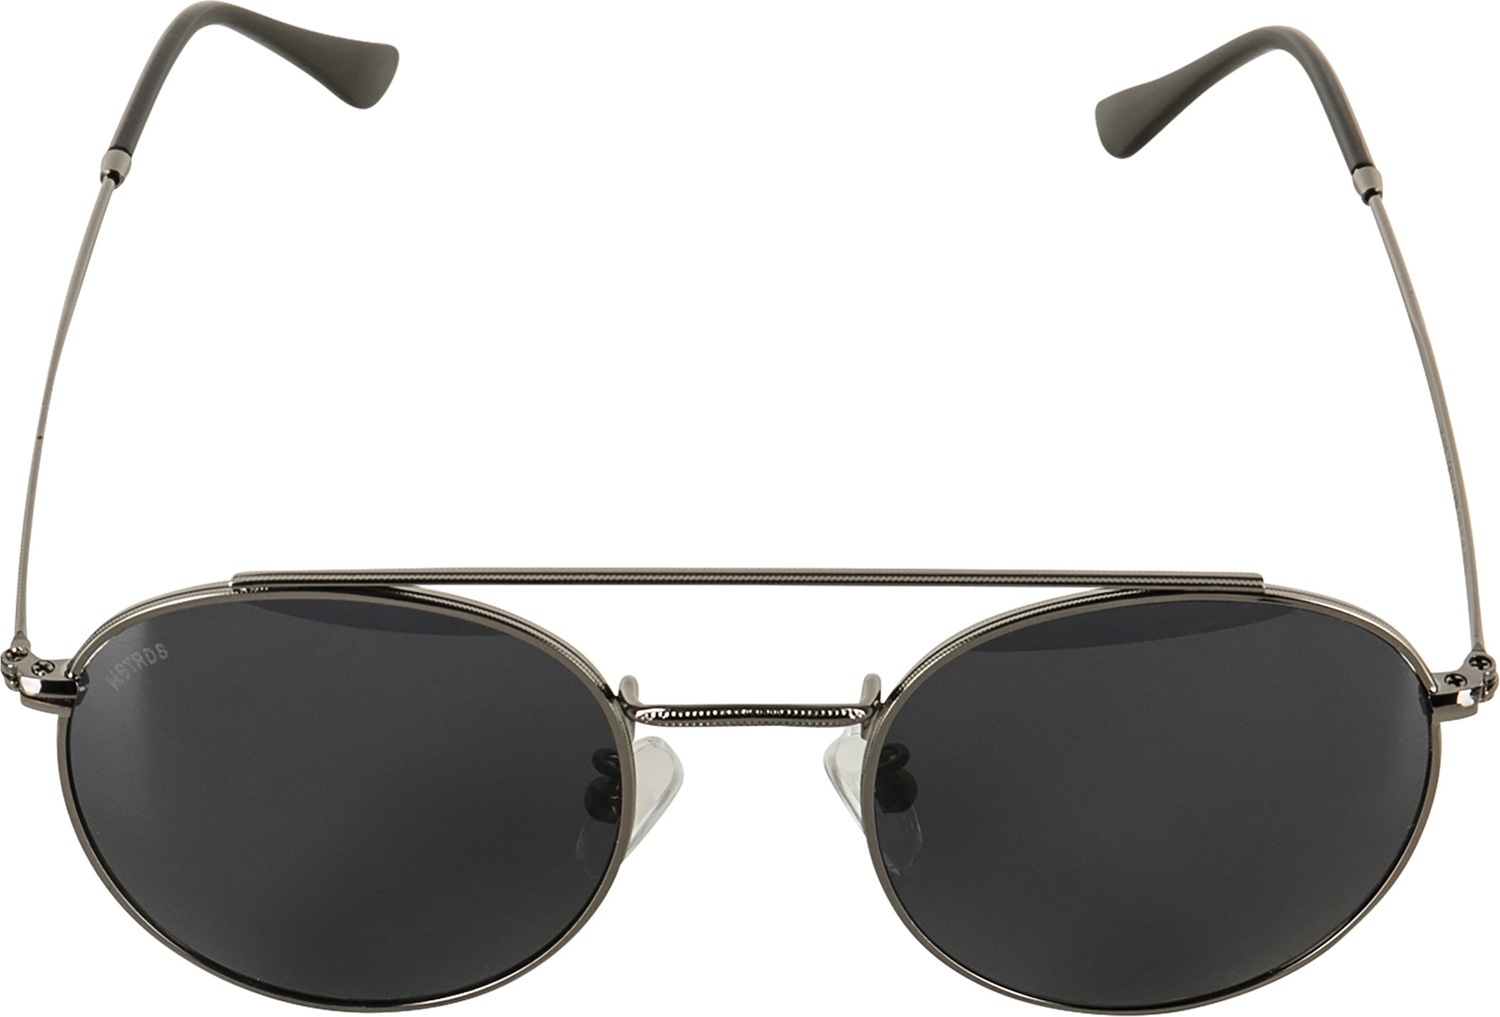 | MSTRDS | Sunglasses Lifestyle August Sunglasses Sun Glasses Men | Gunmetal/Black